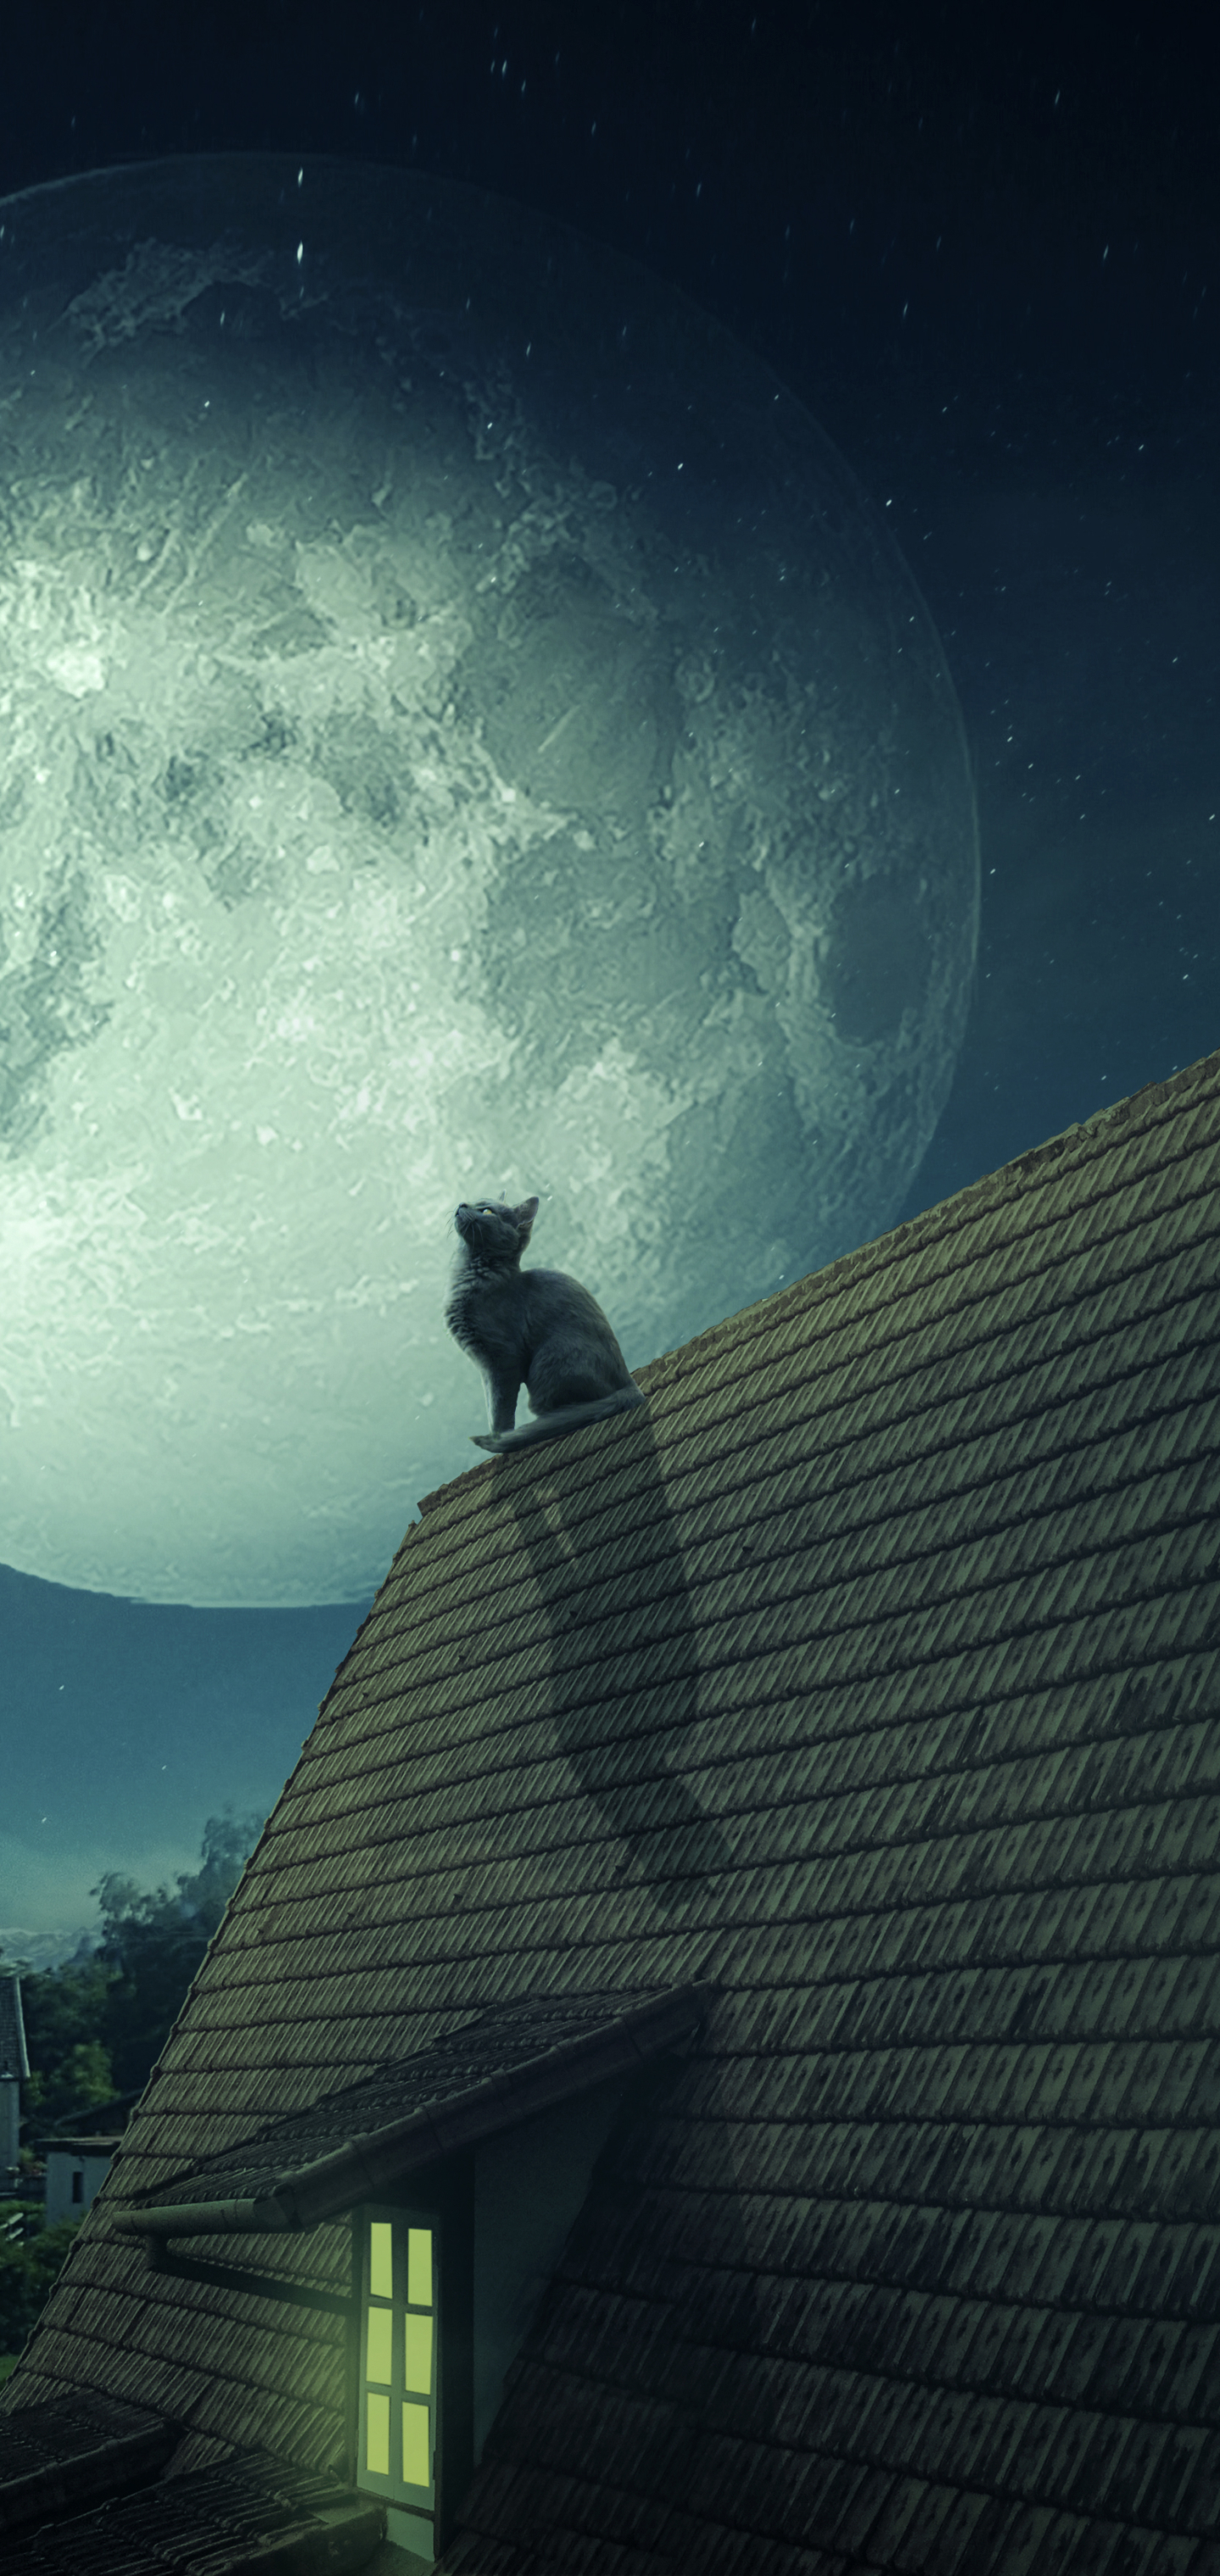 animal, cat, roof, moon, night, cats